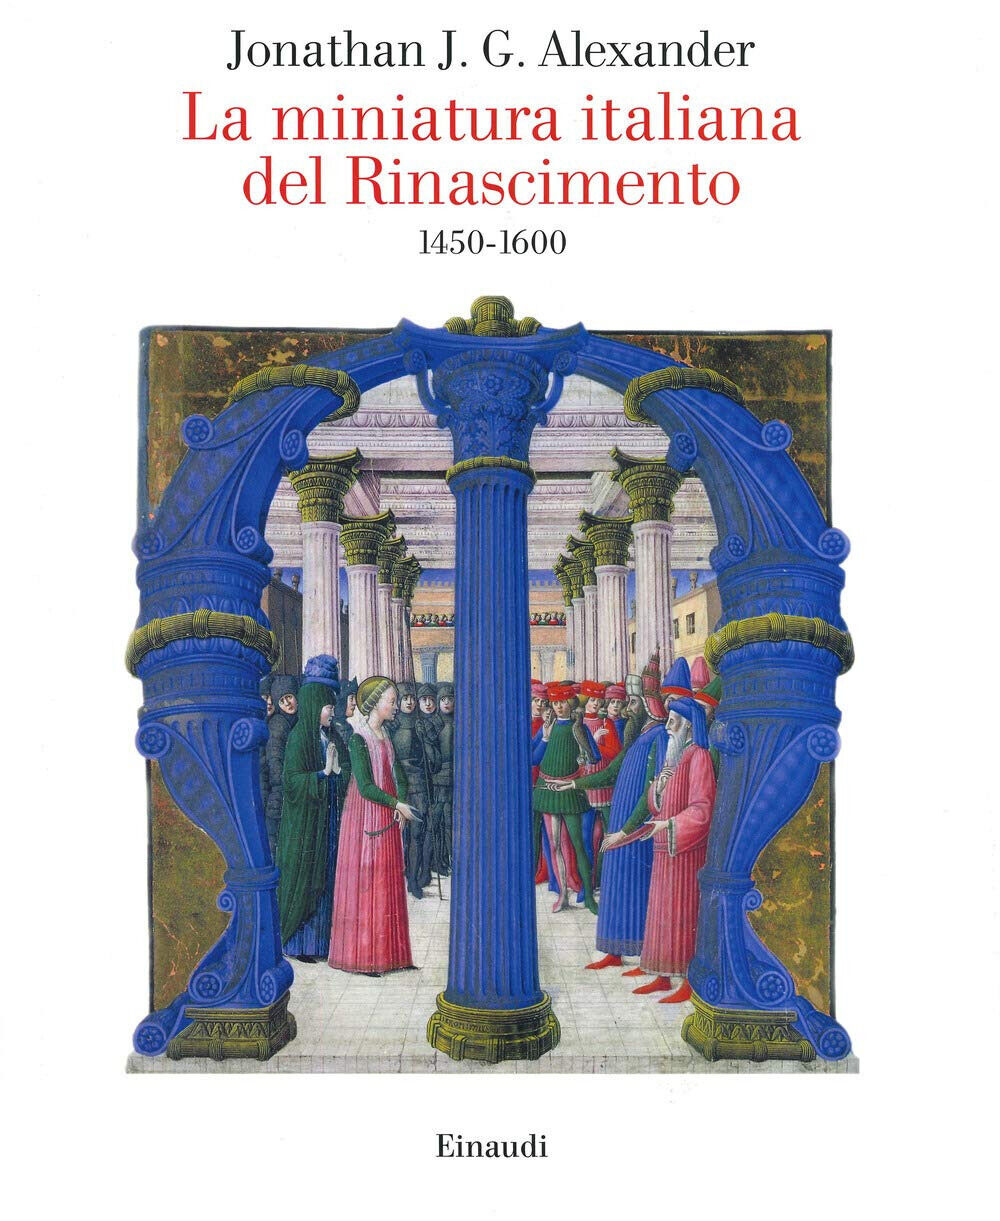 La miniatura italiana del Rinascimento 1450-1600 - Jonathan J. G. Alexander-2020